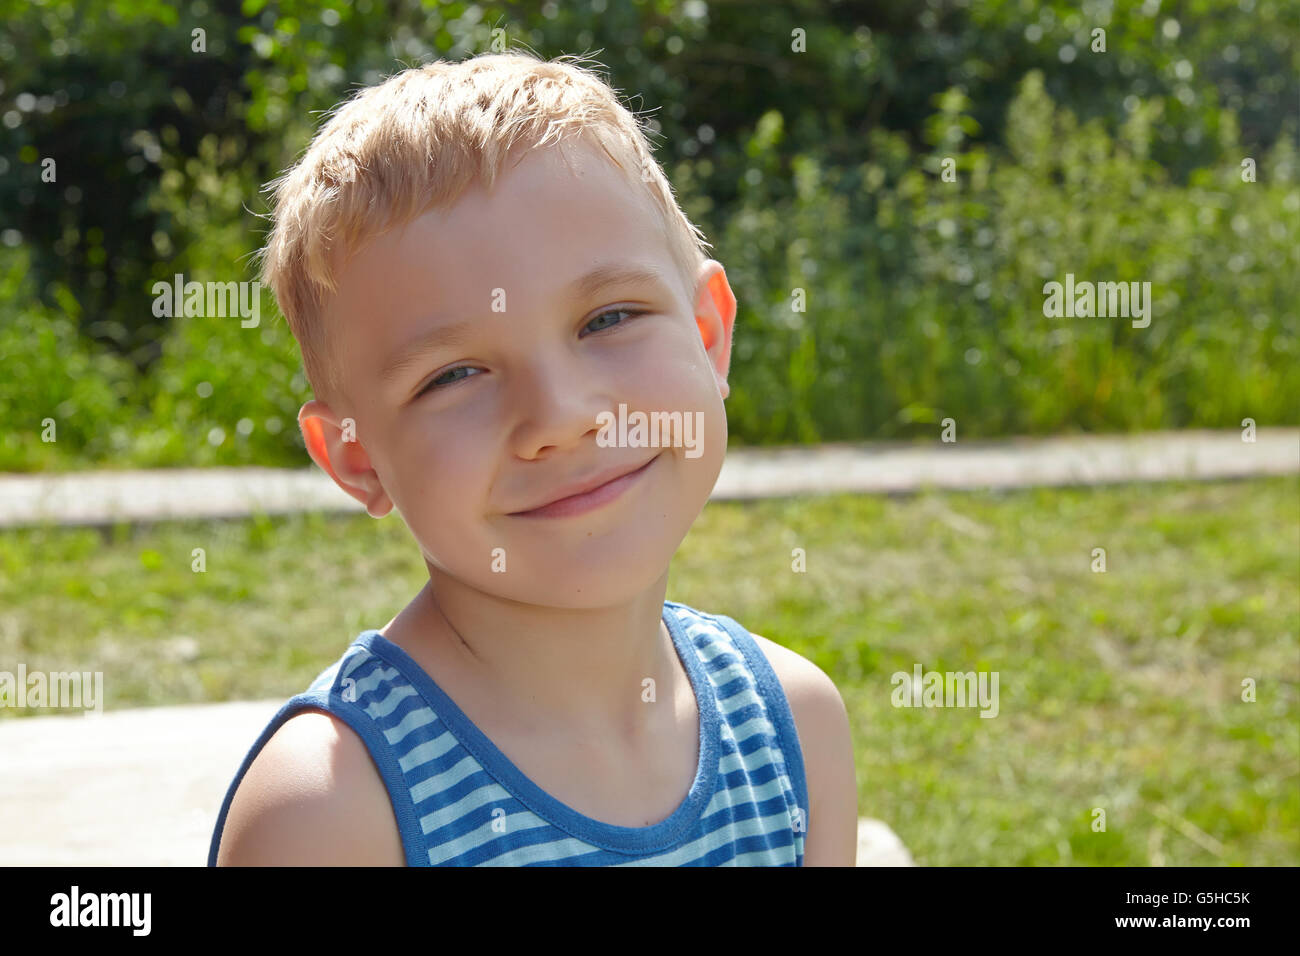 Adorable boy portrait outdoors Stock Photo